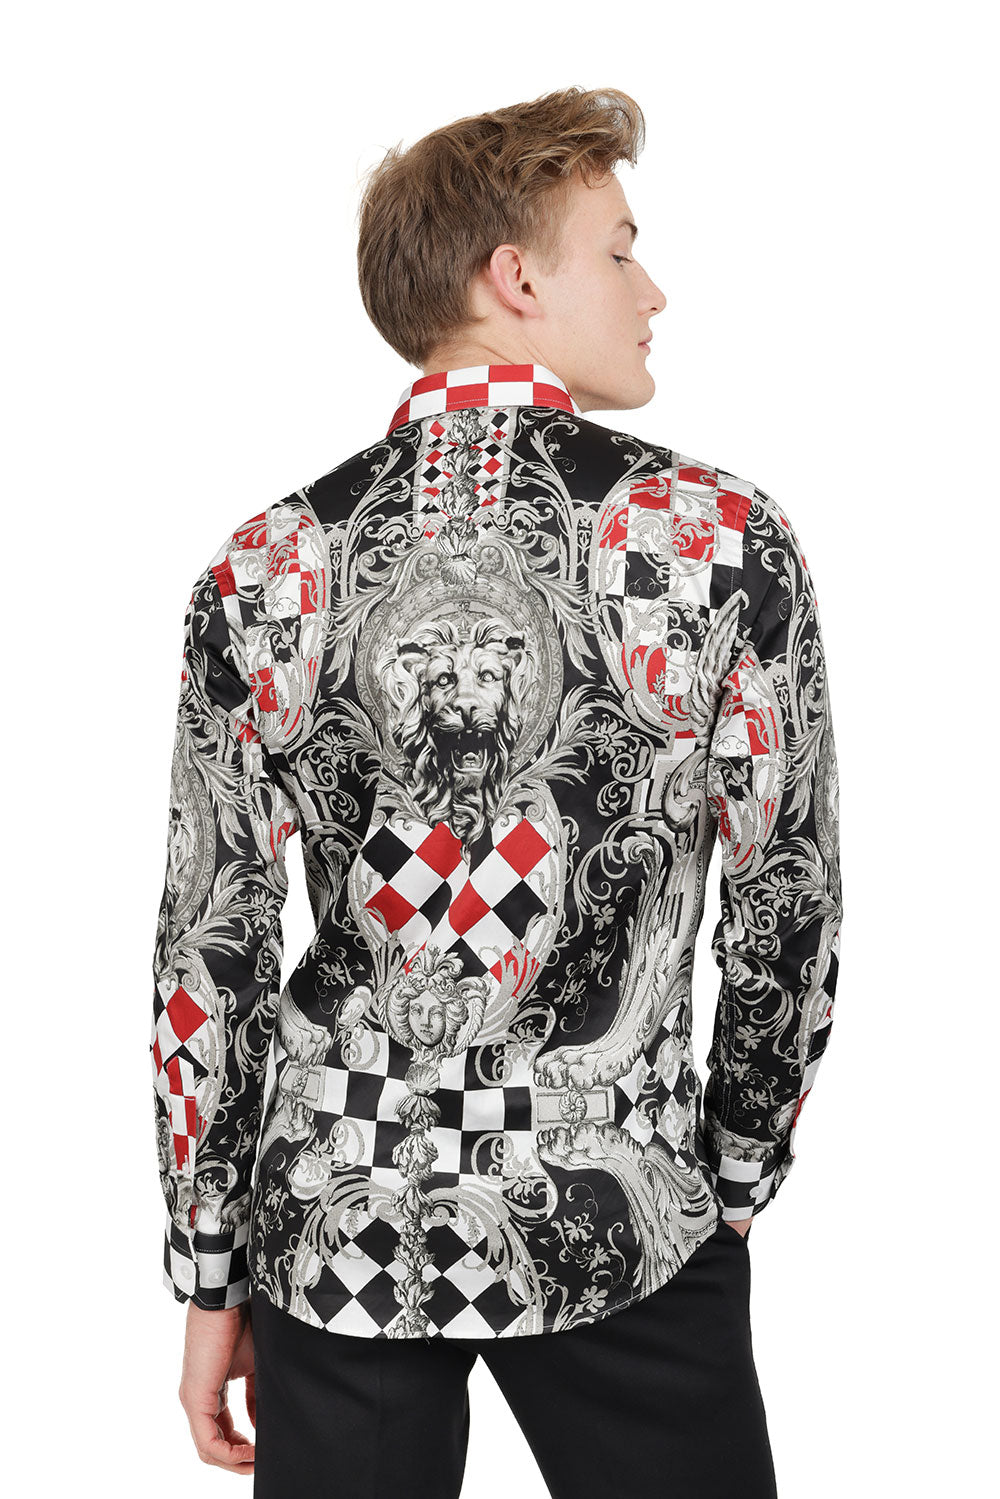 BARABAS Men's Medusa Checkered Lion Baroque Button Down Shirt SP20 Black Red